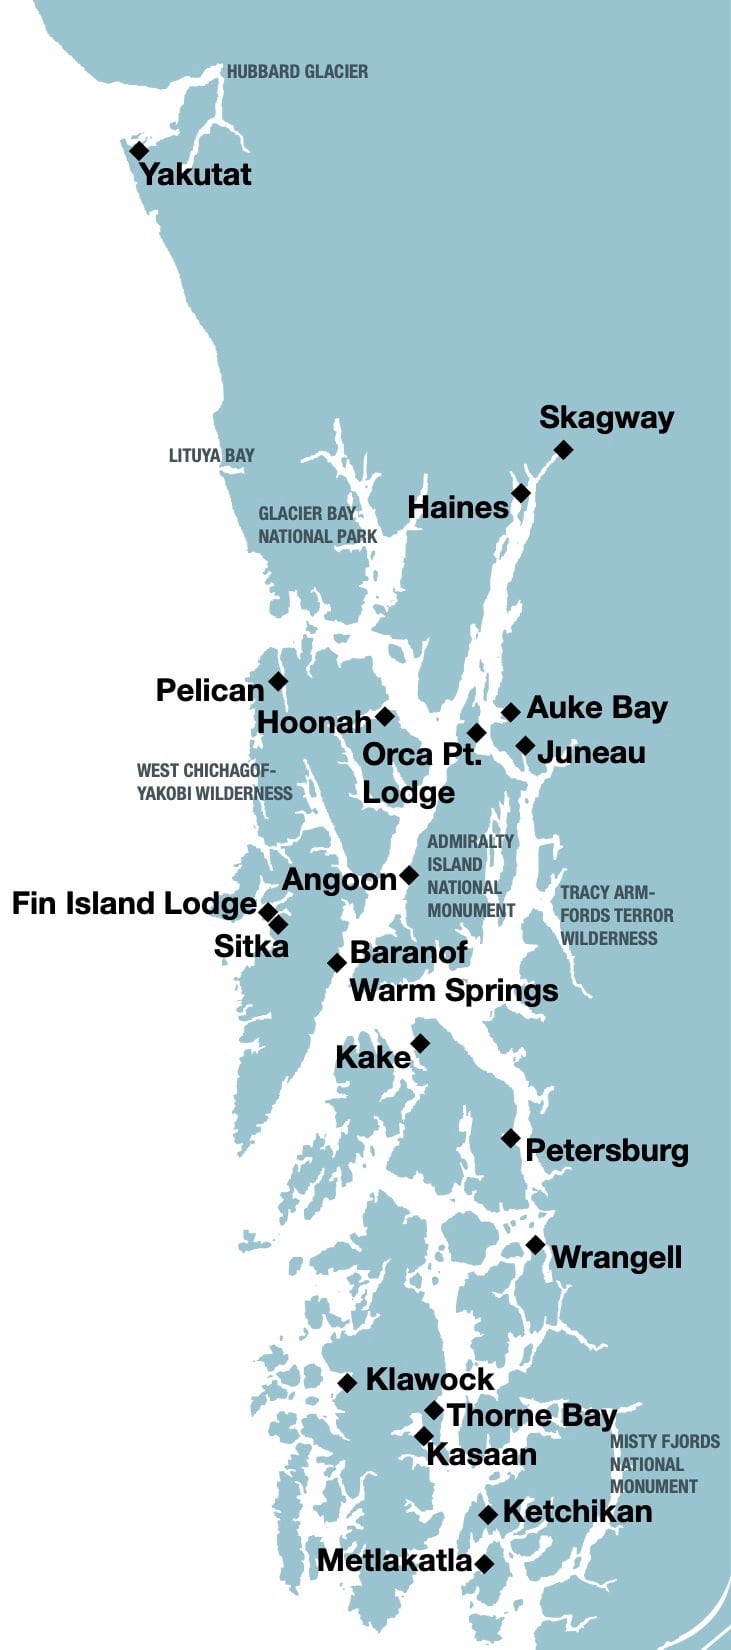 Route map of Alaska small ship cruises between Metlakatla and Yakutat, with markers on Pelican, Glacier Bay National Park, Lituya Bay, Disenchantment Bay, Hubbard Glacier, Skagway, Haines, Auke Bay, Juneau, Hoonah, Orca Point Lodge, Angoon, Fin Island Lodge, Sitka, Baranof Warm Springs, Kake, Petersburg, Wrangell, Klawock, Thorne Bay, Kasaan & Ketchikan.